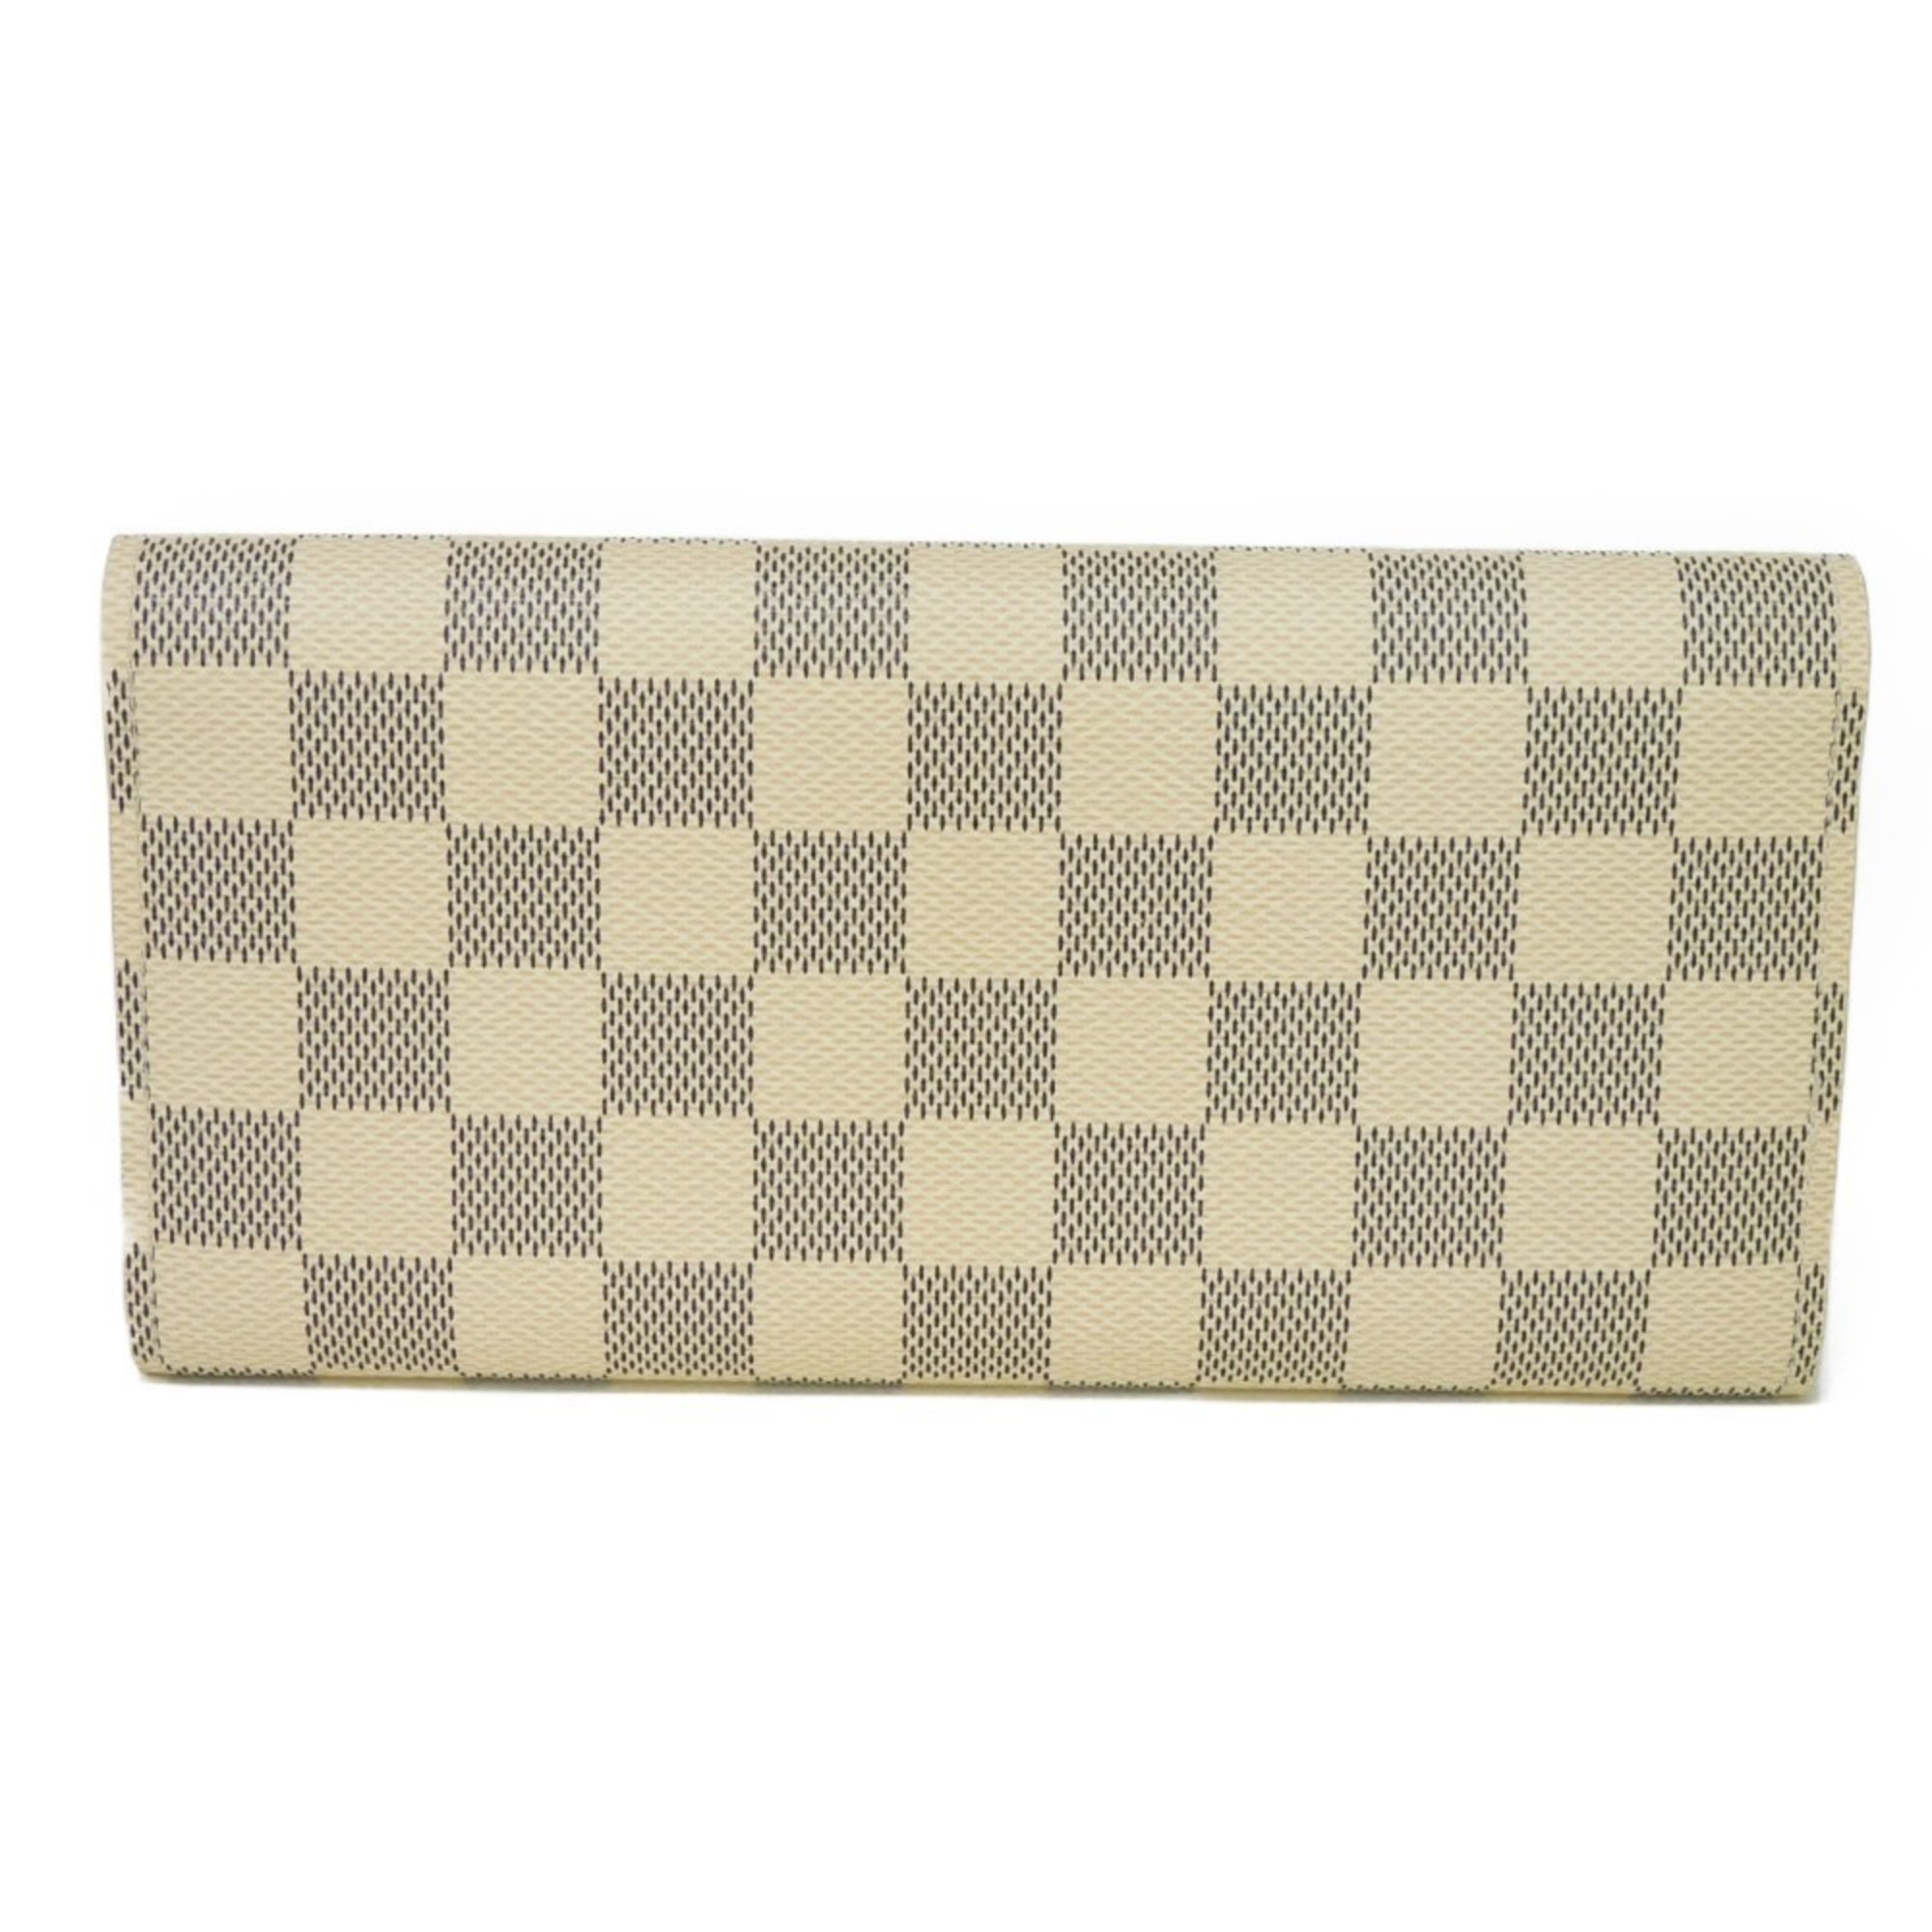 LOUIS VUITTON Trifold Wallet Portefeuille Josephine White Checkered Pattern Damier Azur Ivory N63545 Men's Women's Bill Purse